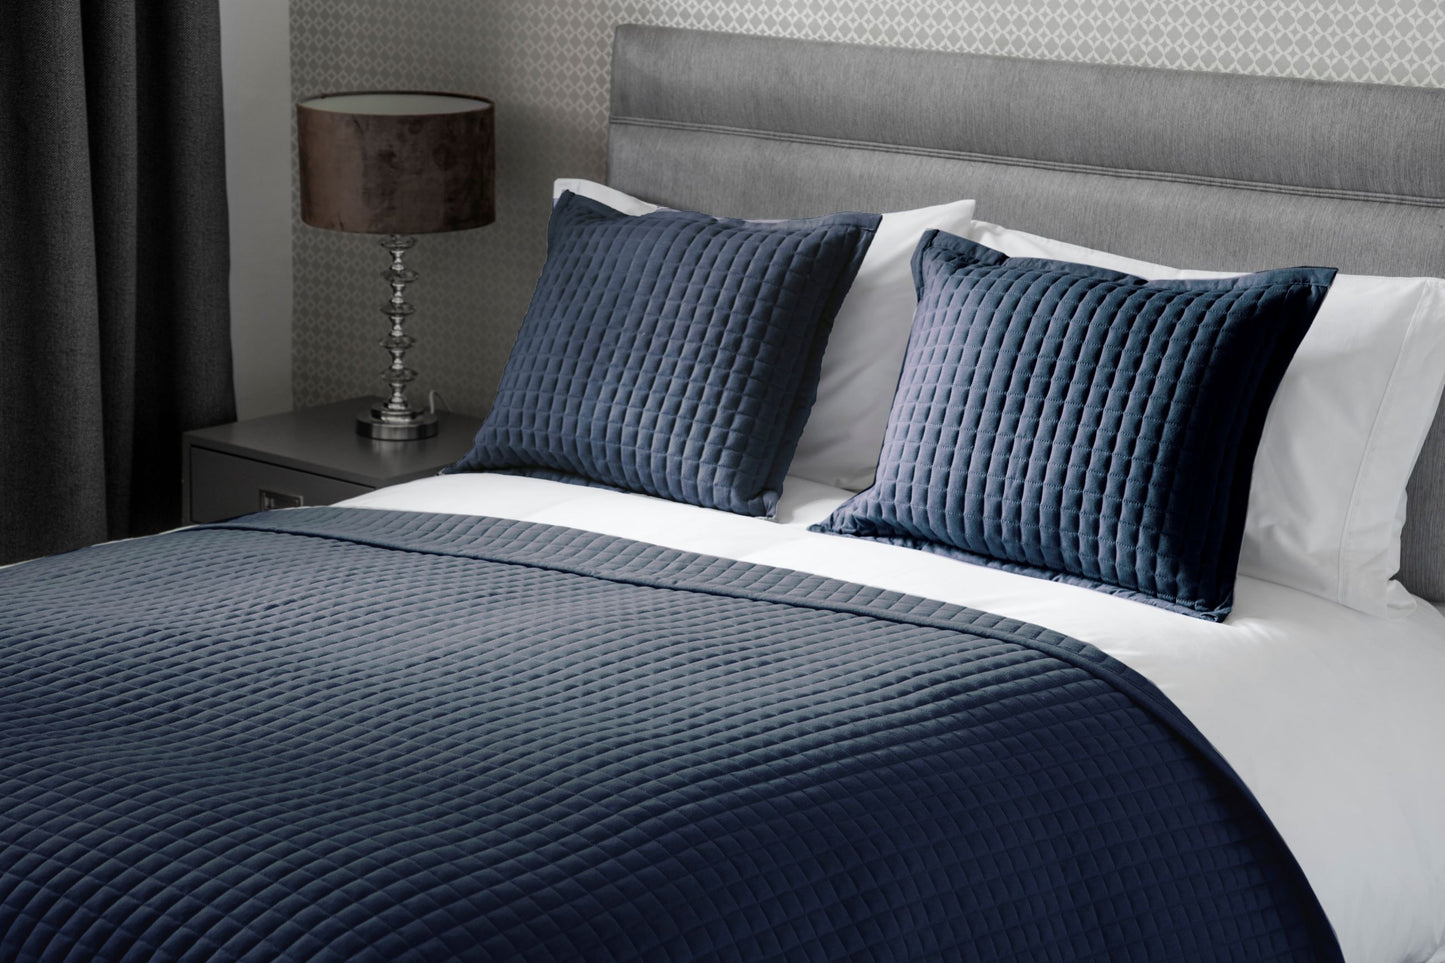 Lightly Quilted Bed Runner / Bedspread Navy Blue